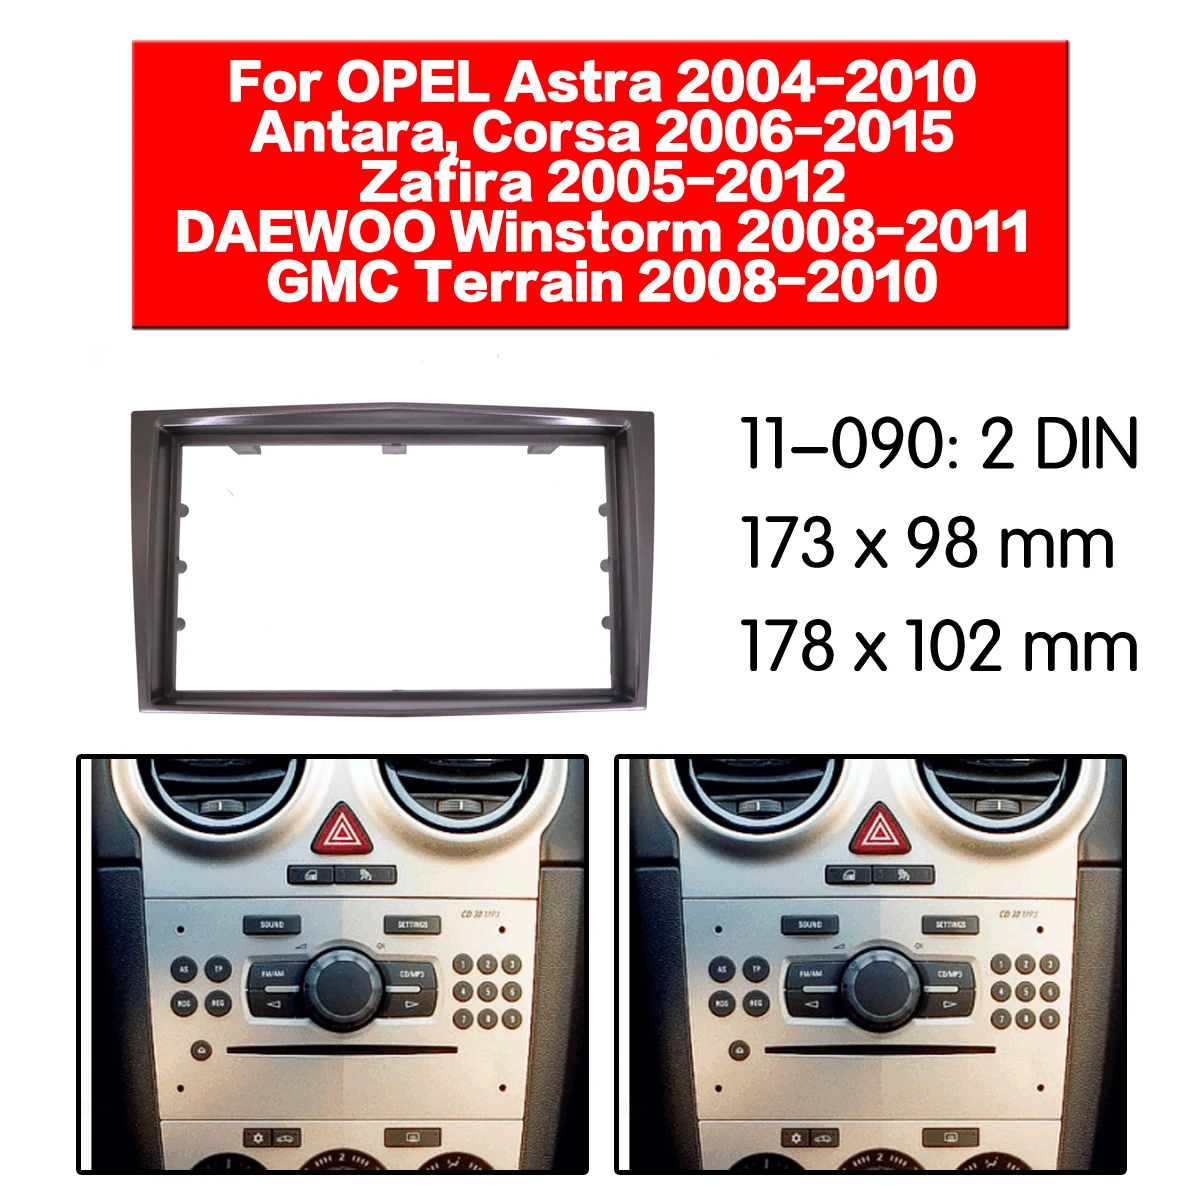 Фасция радиорамки для OPEL Astra(H) 2004-2010 Antara Corsa(D) 2006- монтажный адаптер рамка